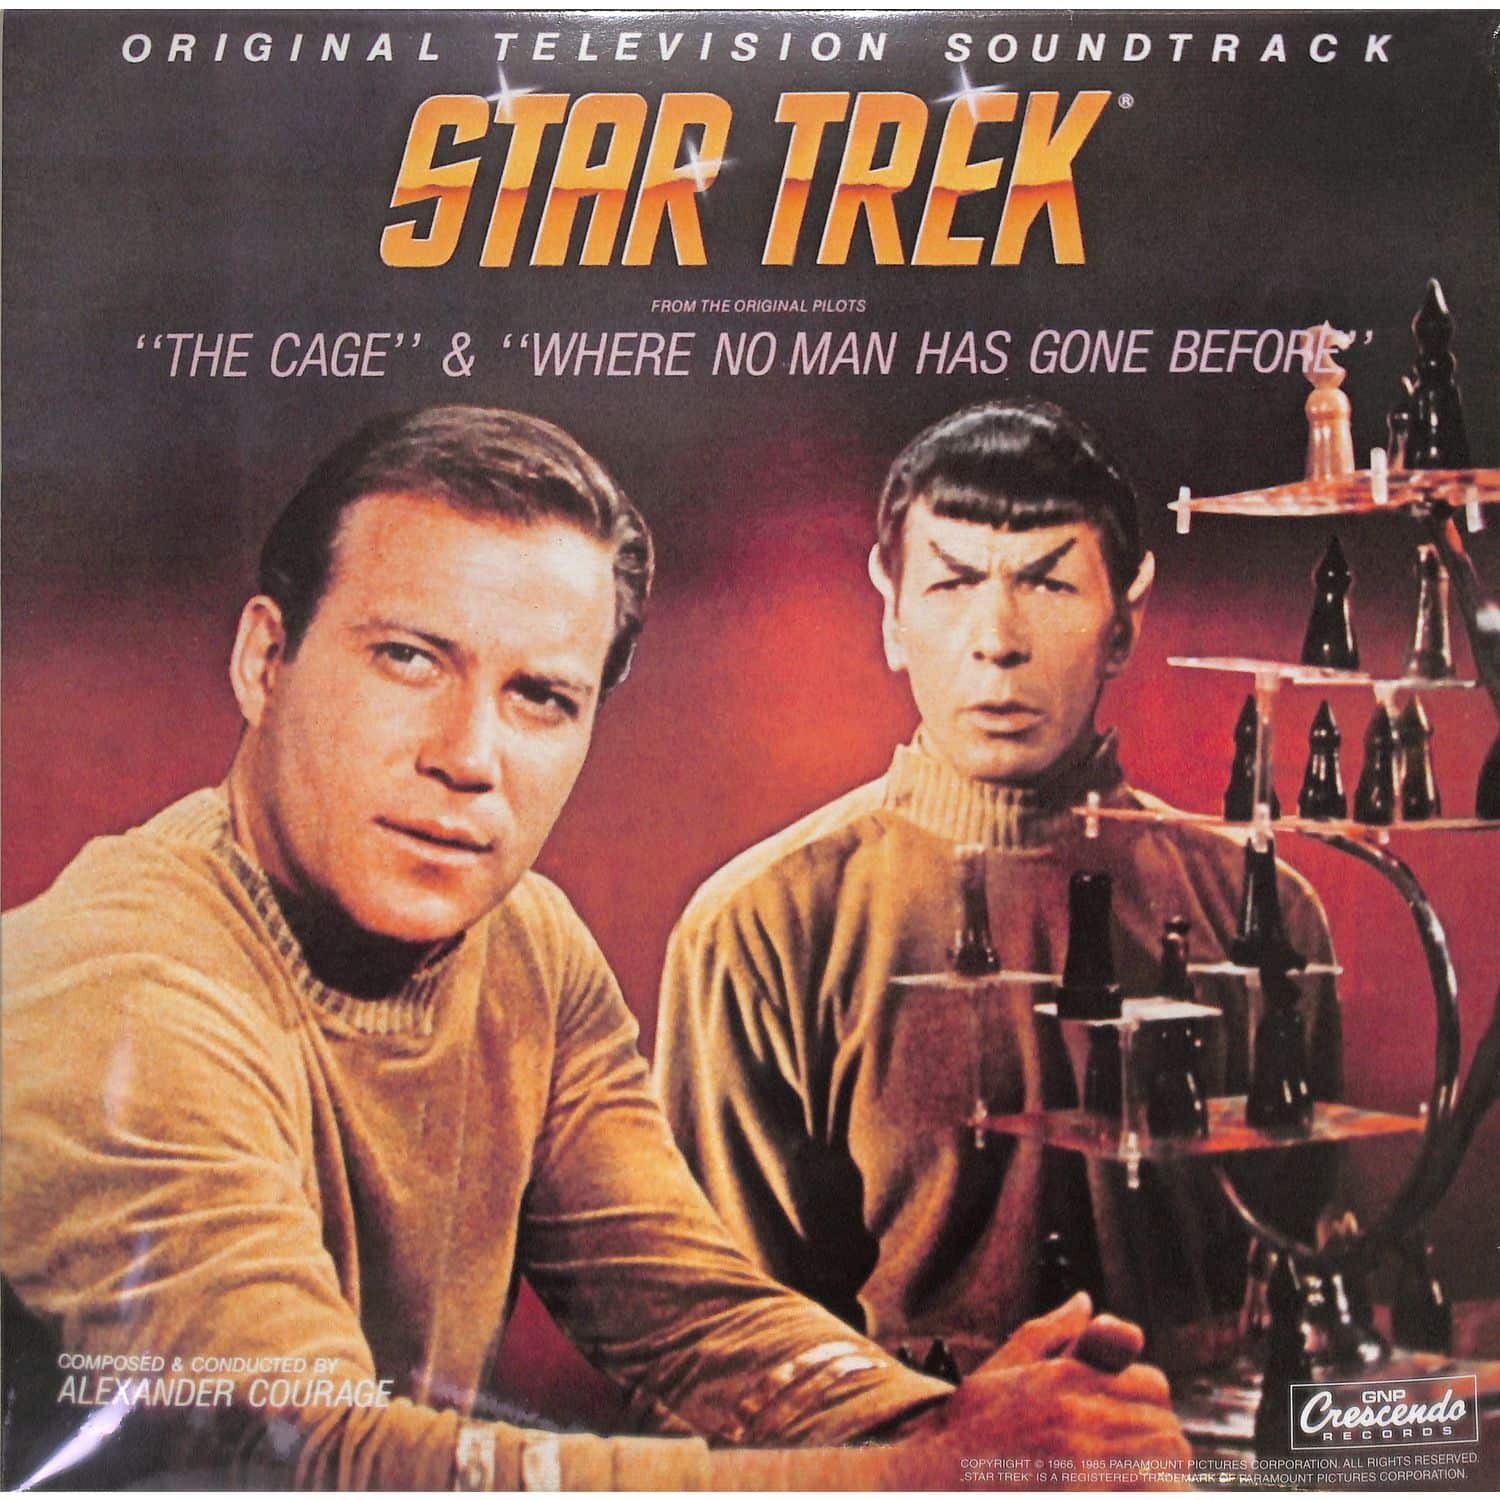 Star Trek - SOUNDTRACK 